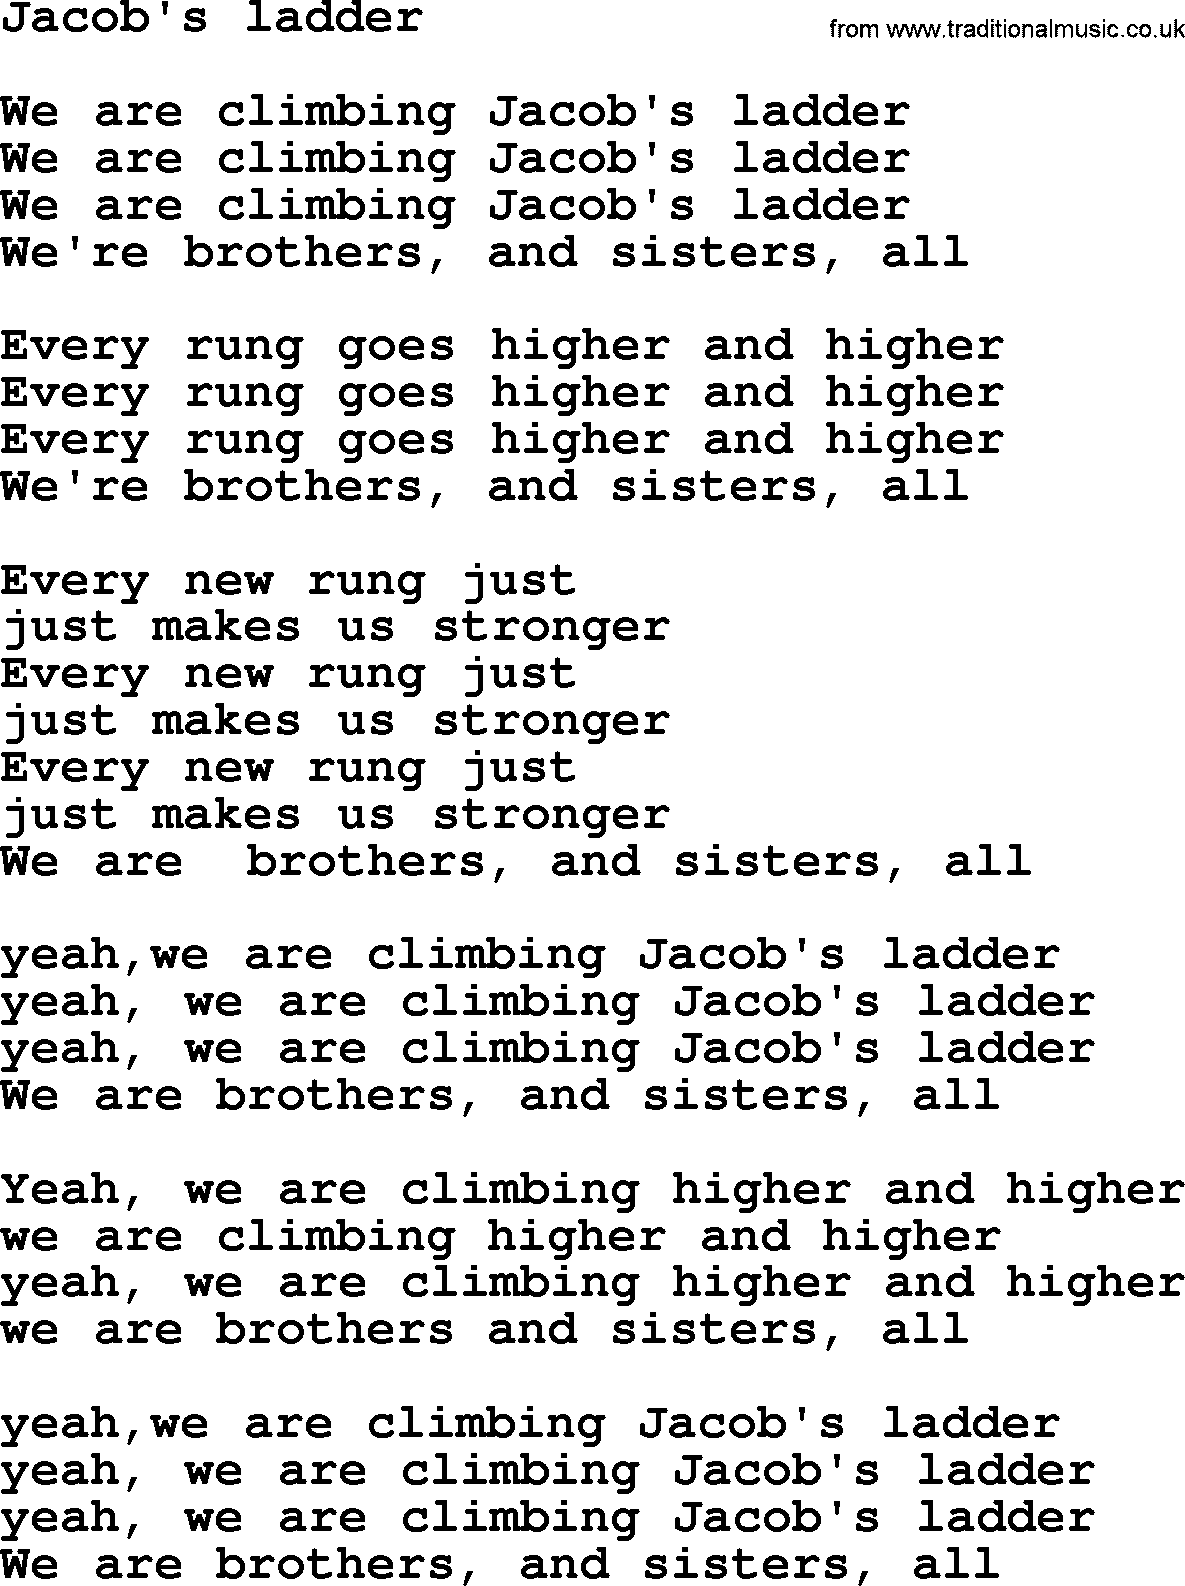 Bruce Springsteen song: Jacob's Ladder lyrics